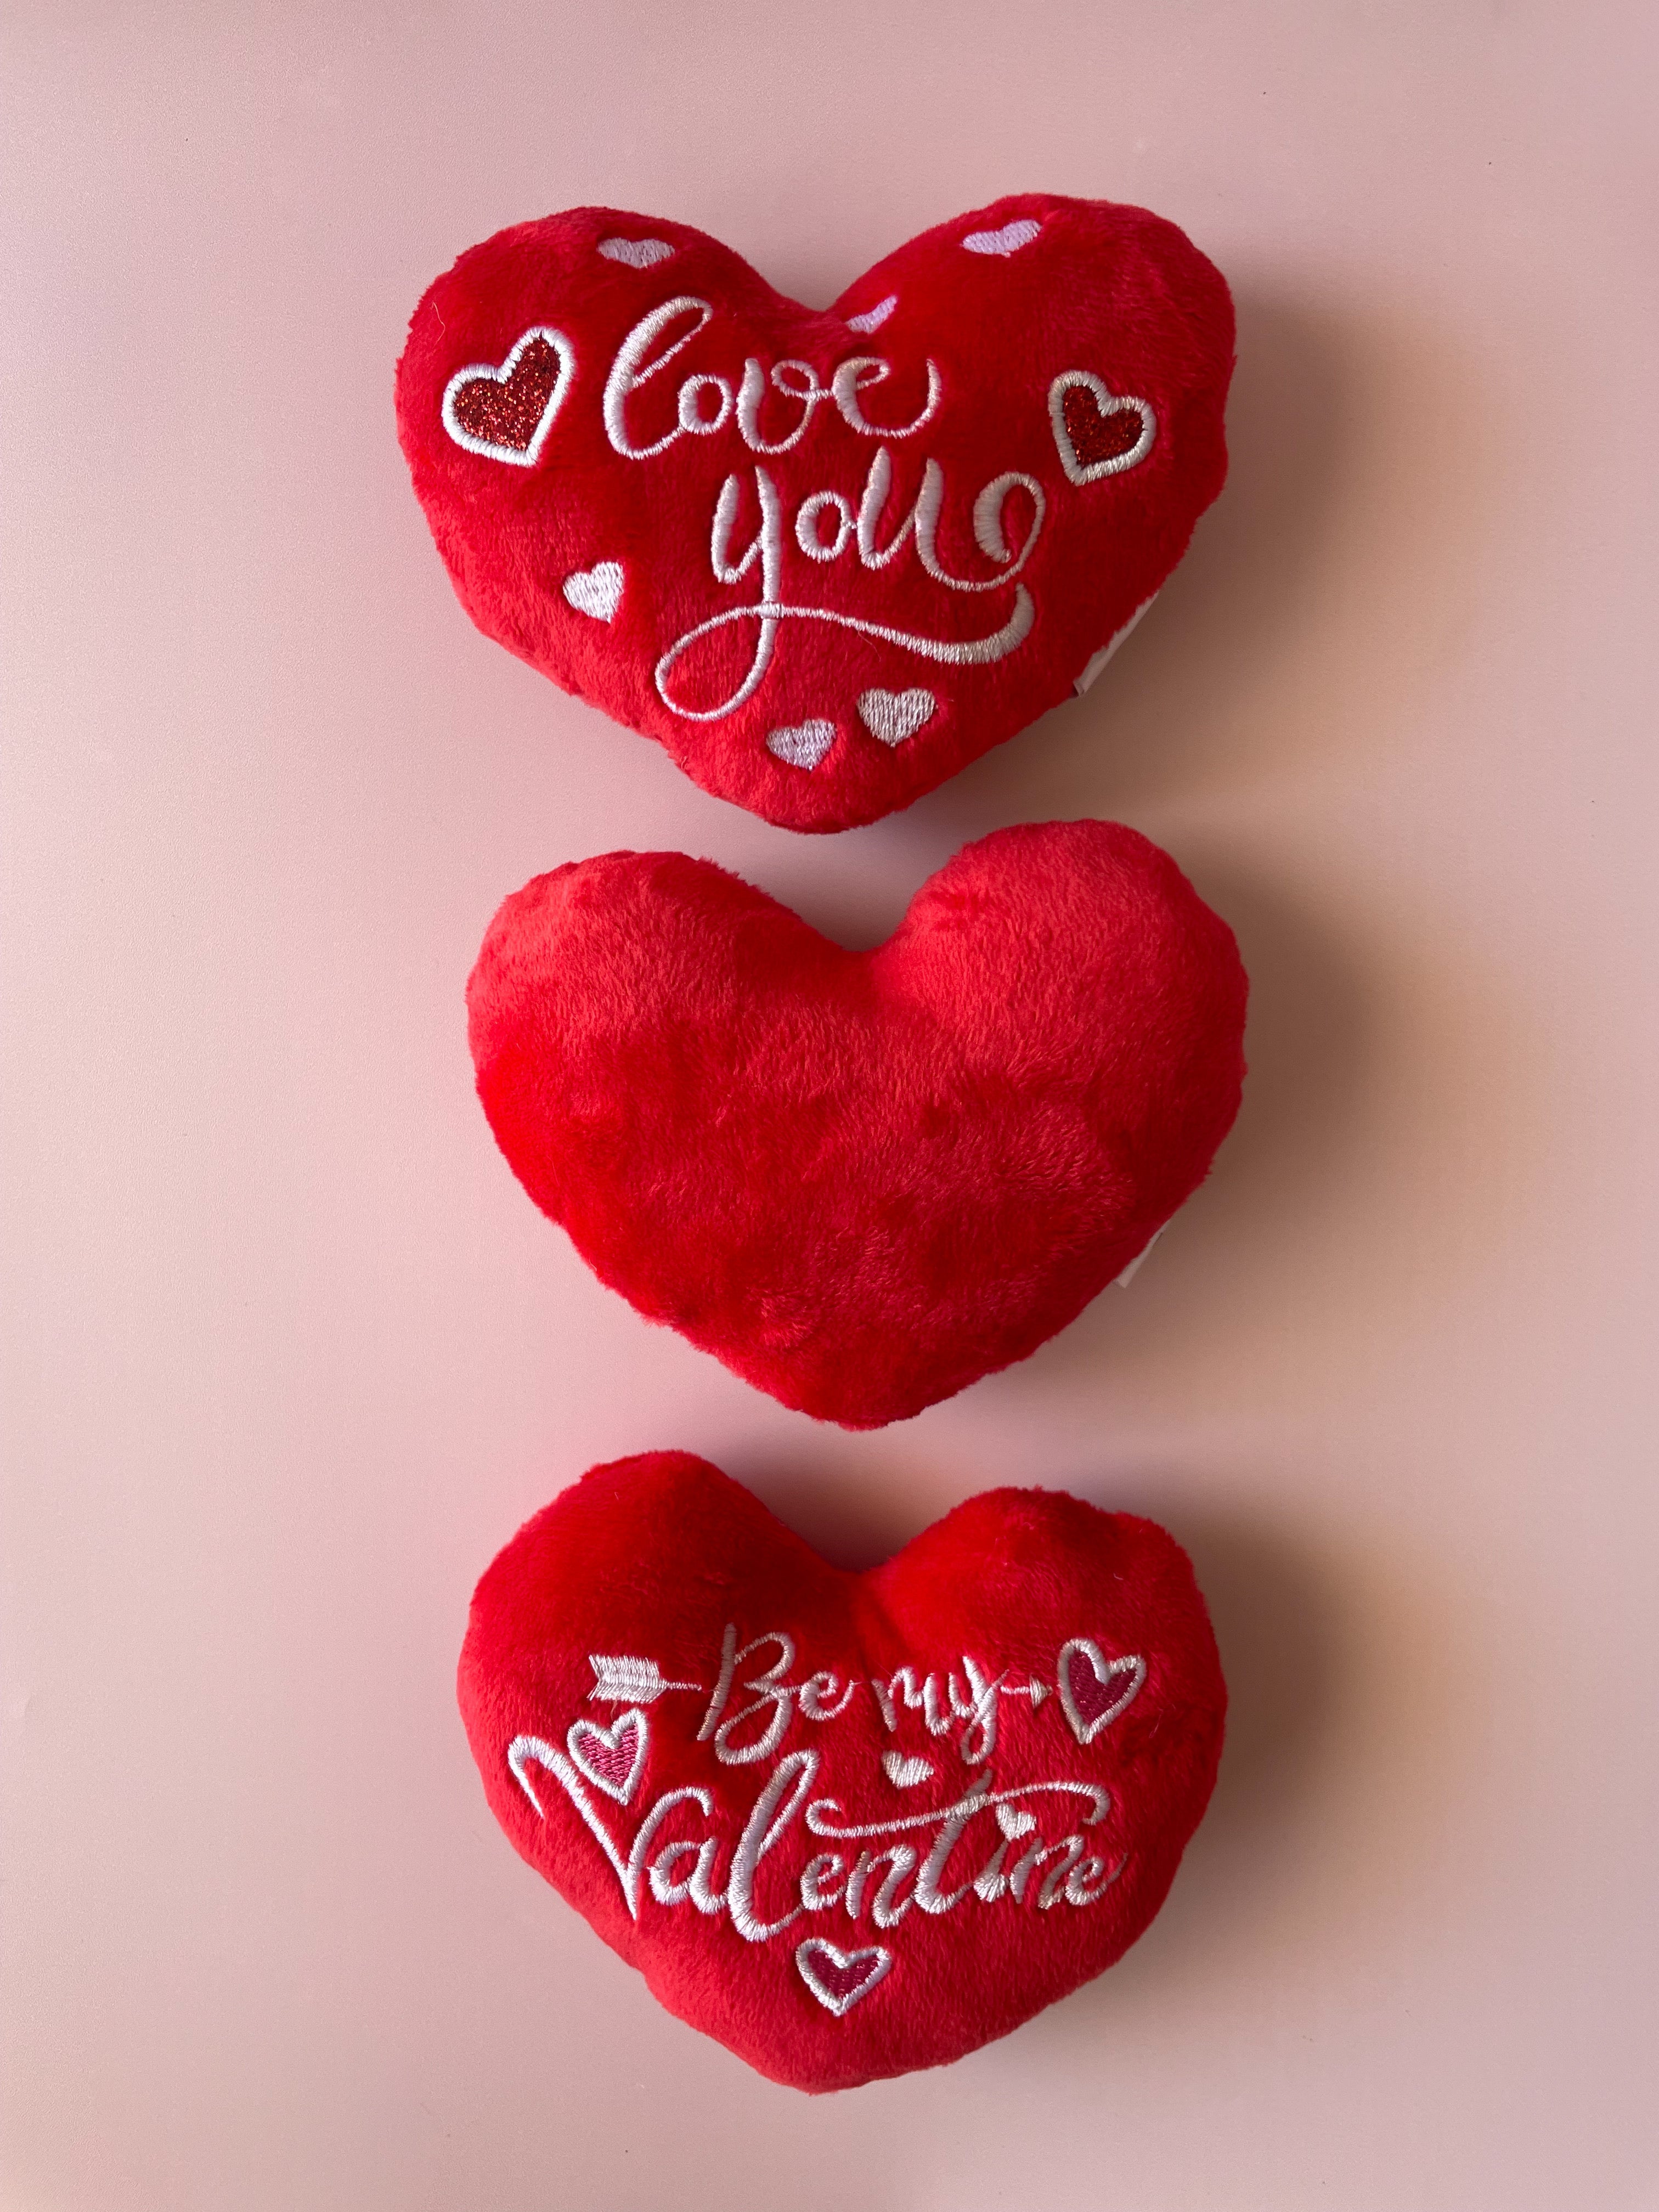 Mini Soft Red Plush Heart - Love You (12cm)